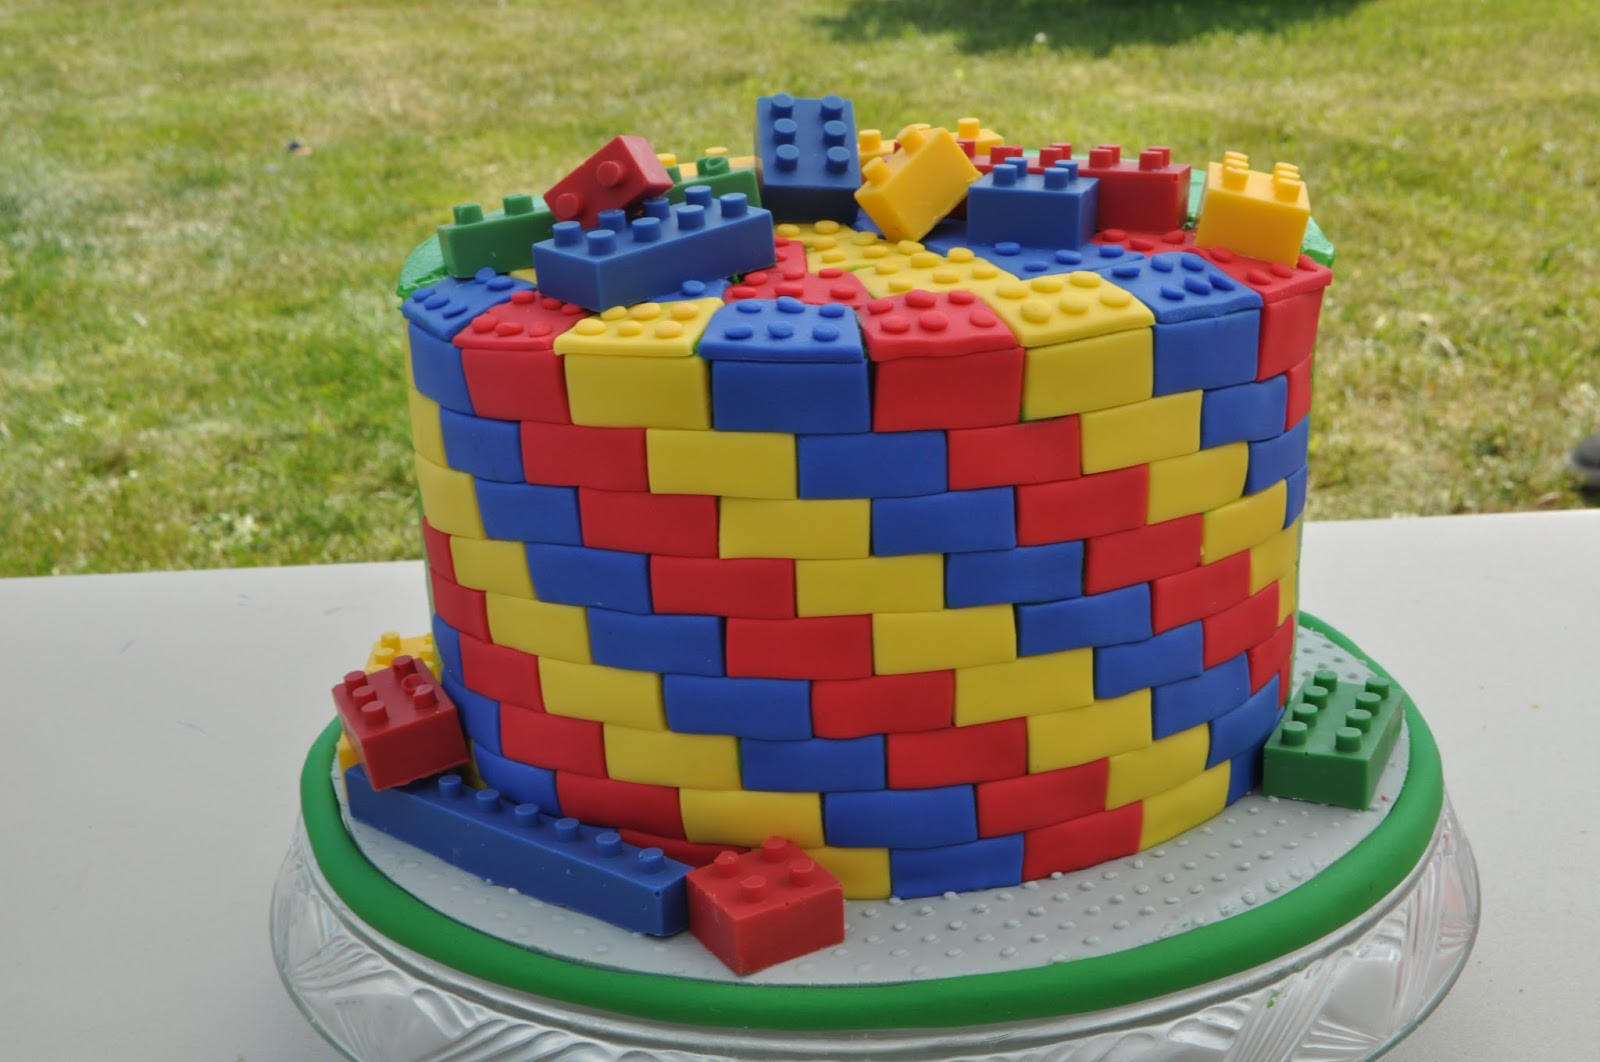 Lego Birthday Cakes
 PEACH OF CAKE Lego Birthday Cake